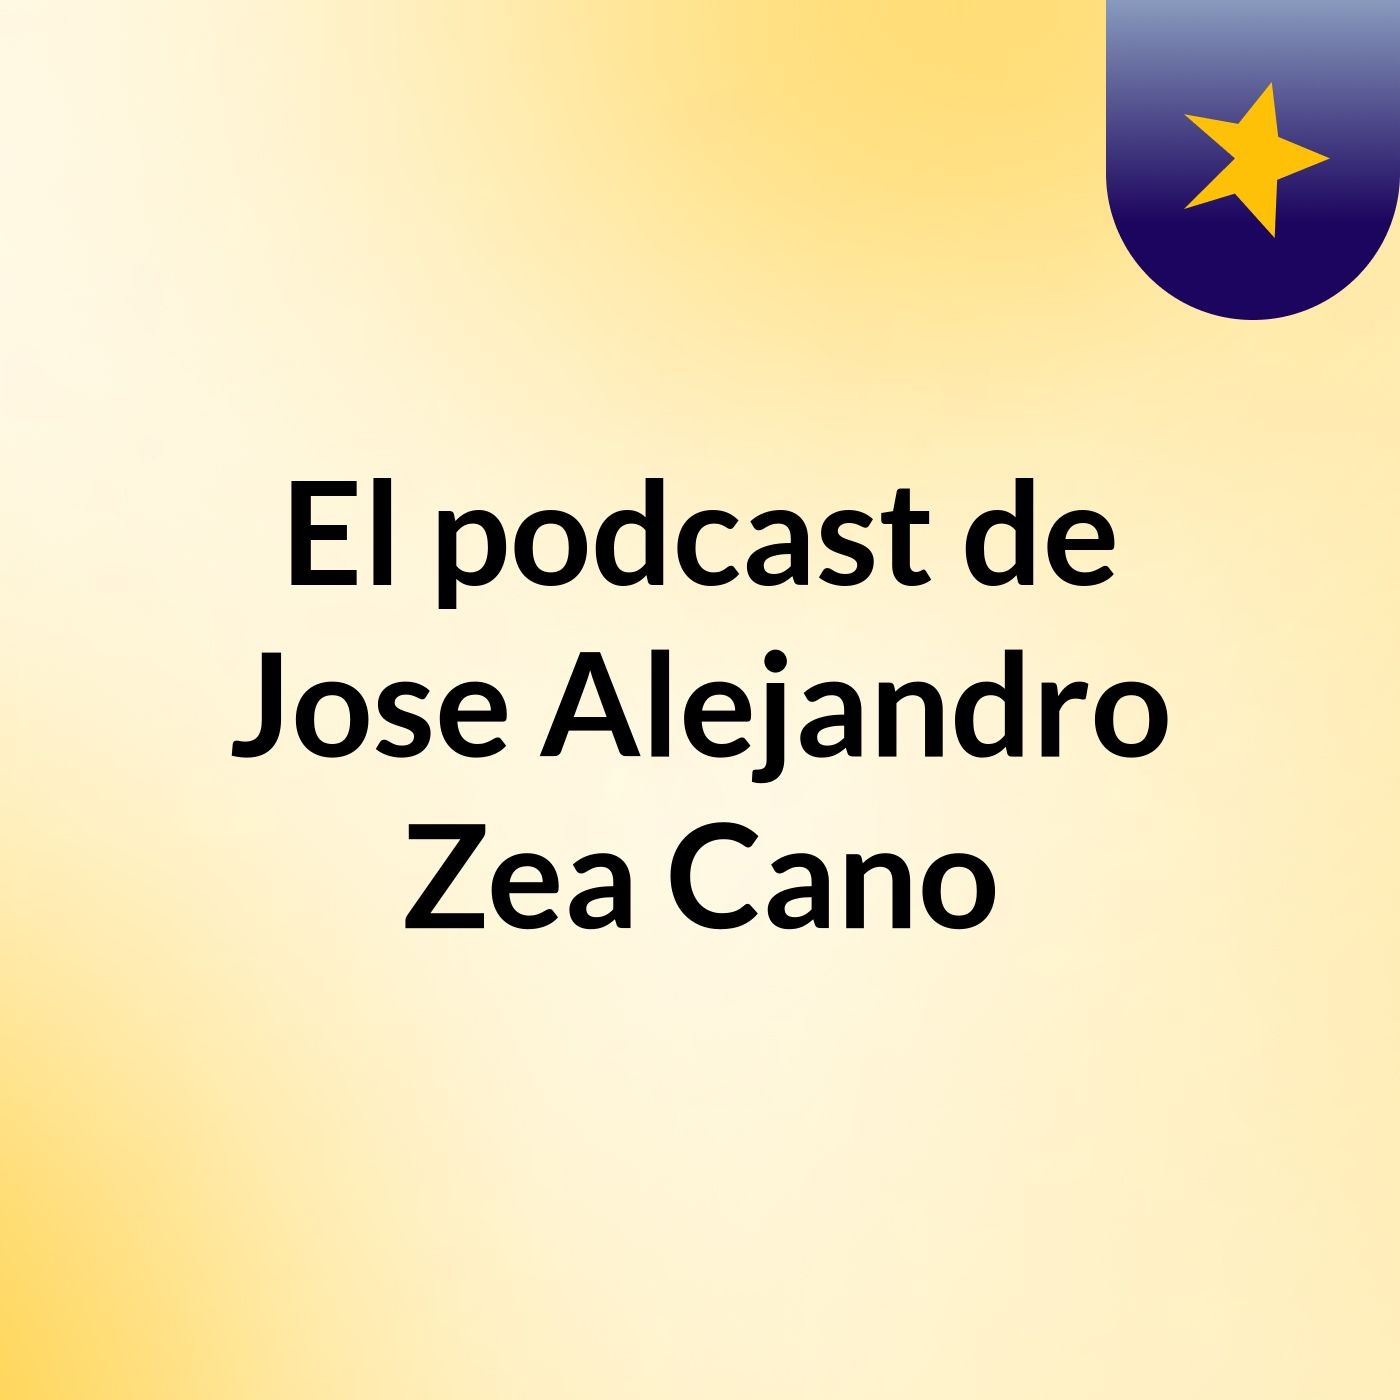 El podcast de Jose Alejandro Zea Cano